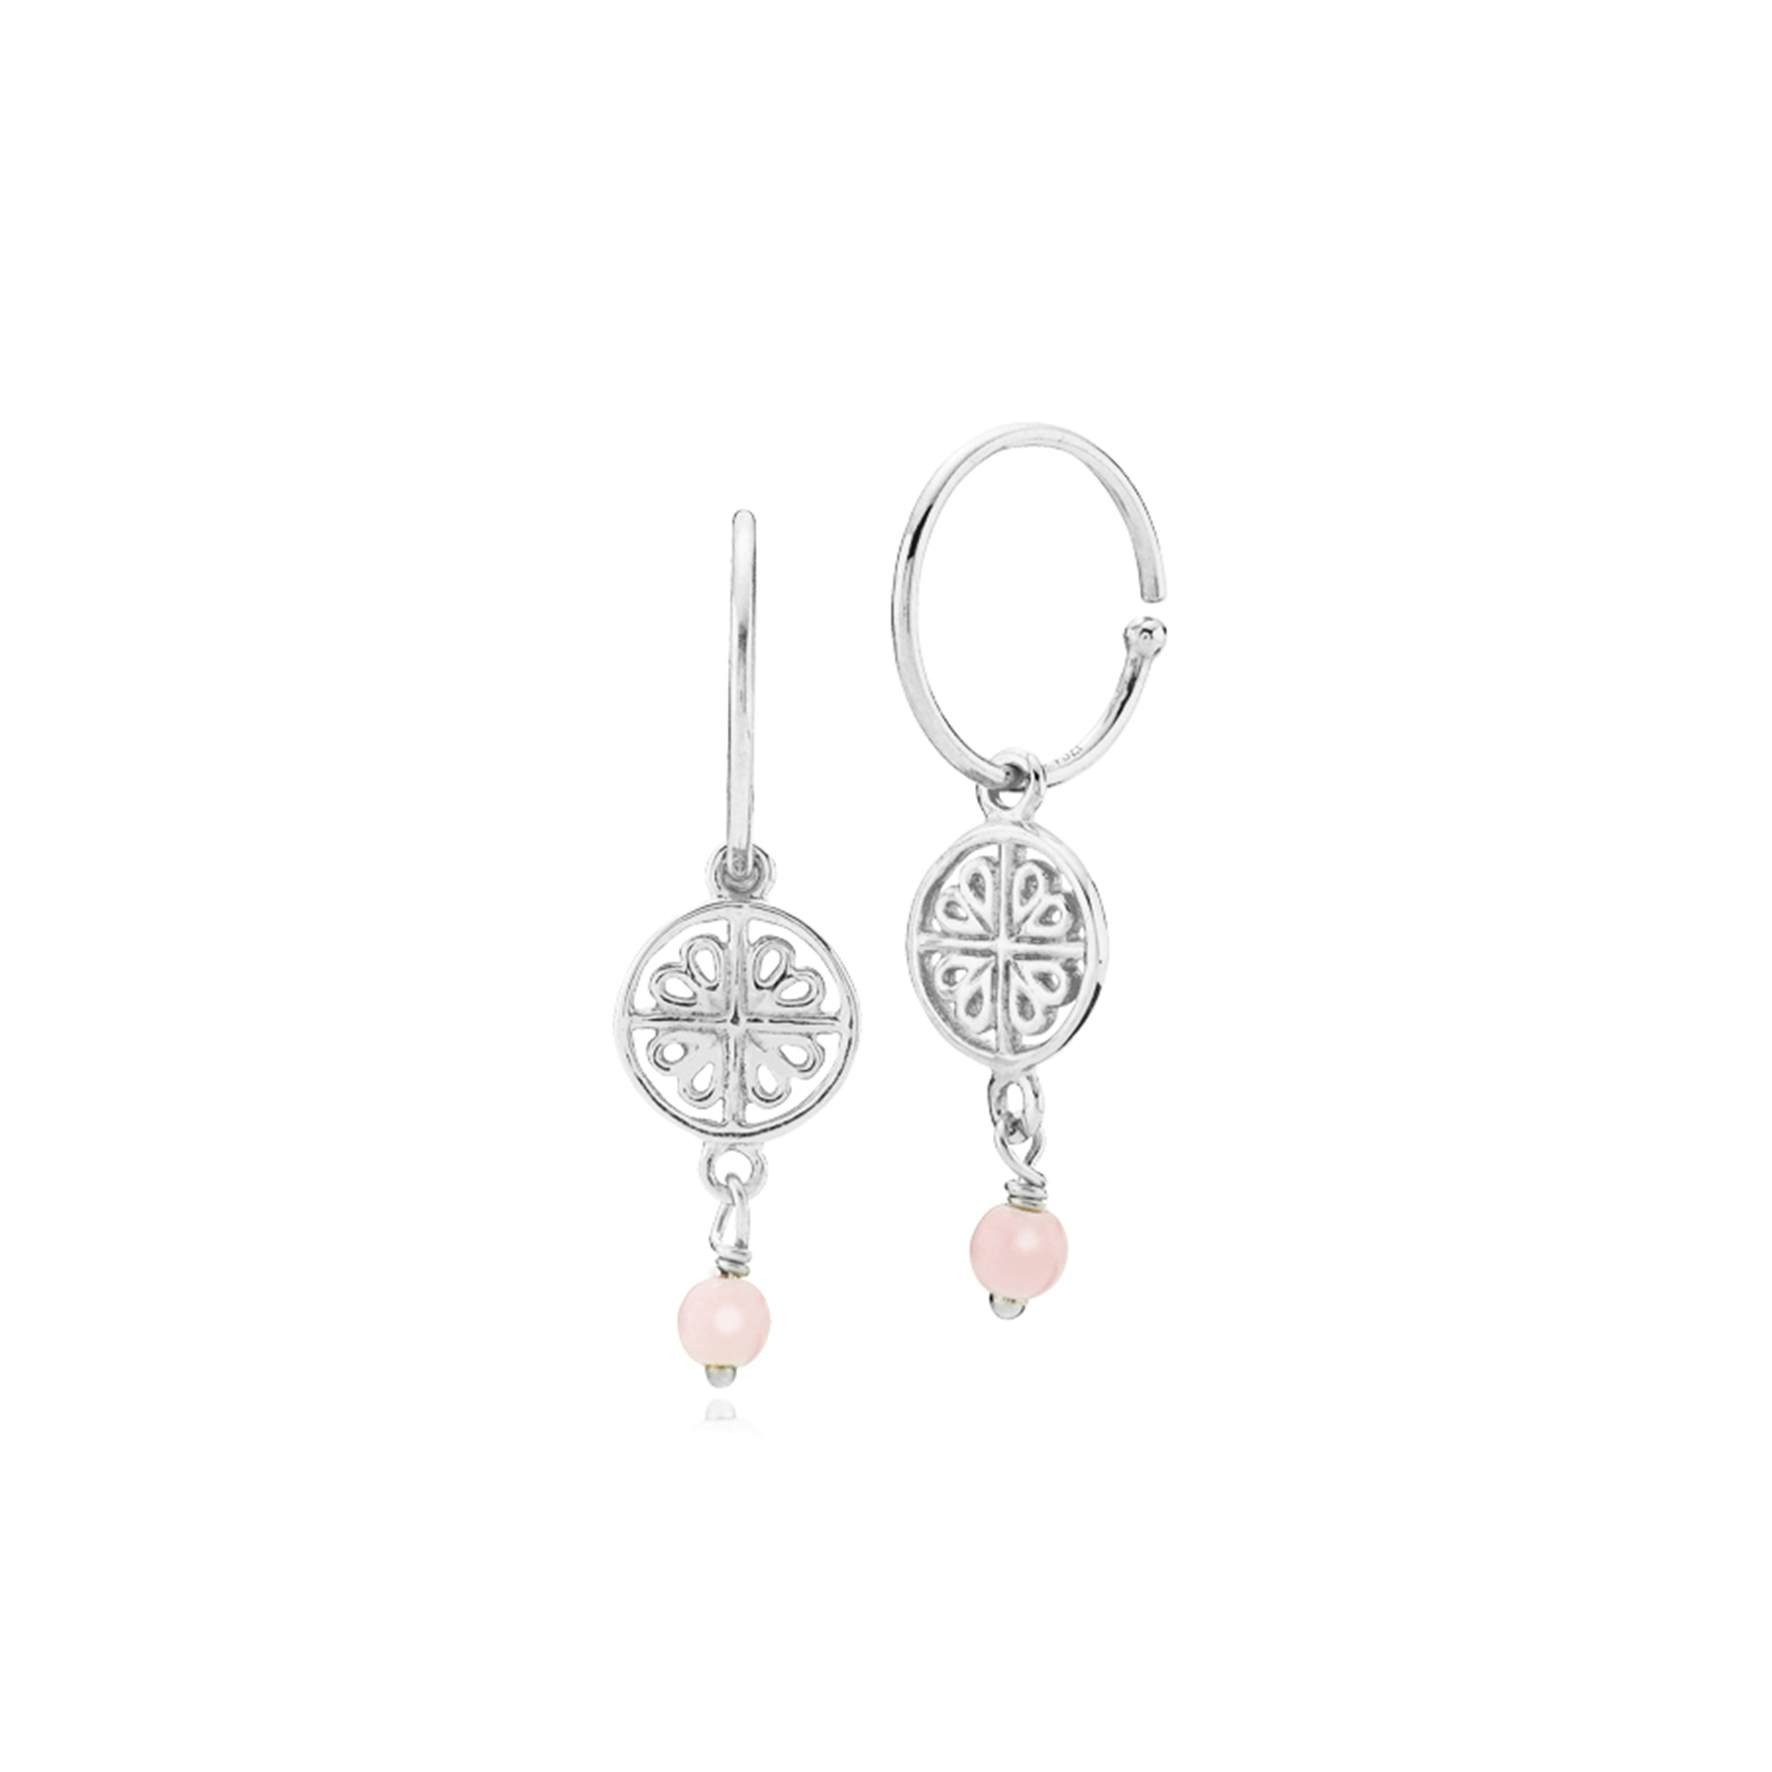 Balance Creol Earrings Pink from Sistie in Silver Sterling 925|Blank